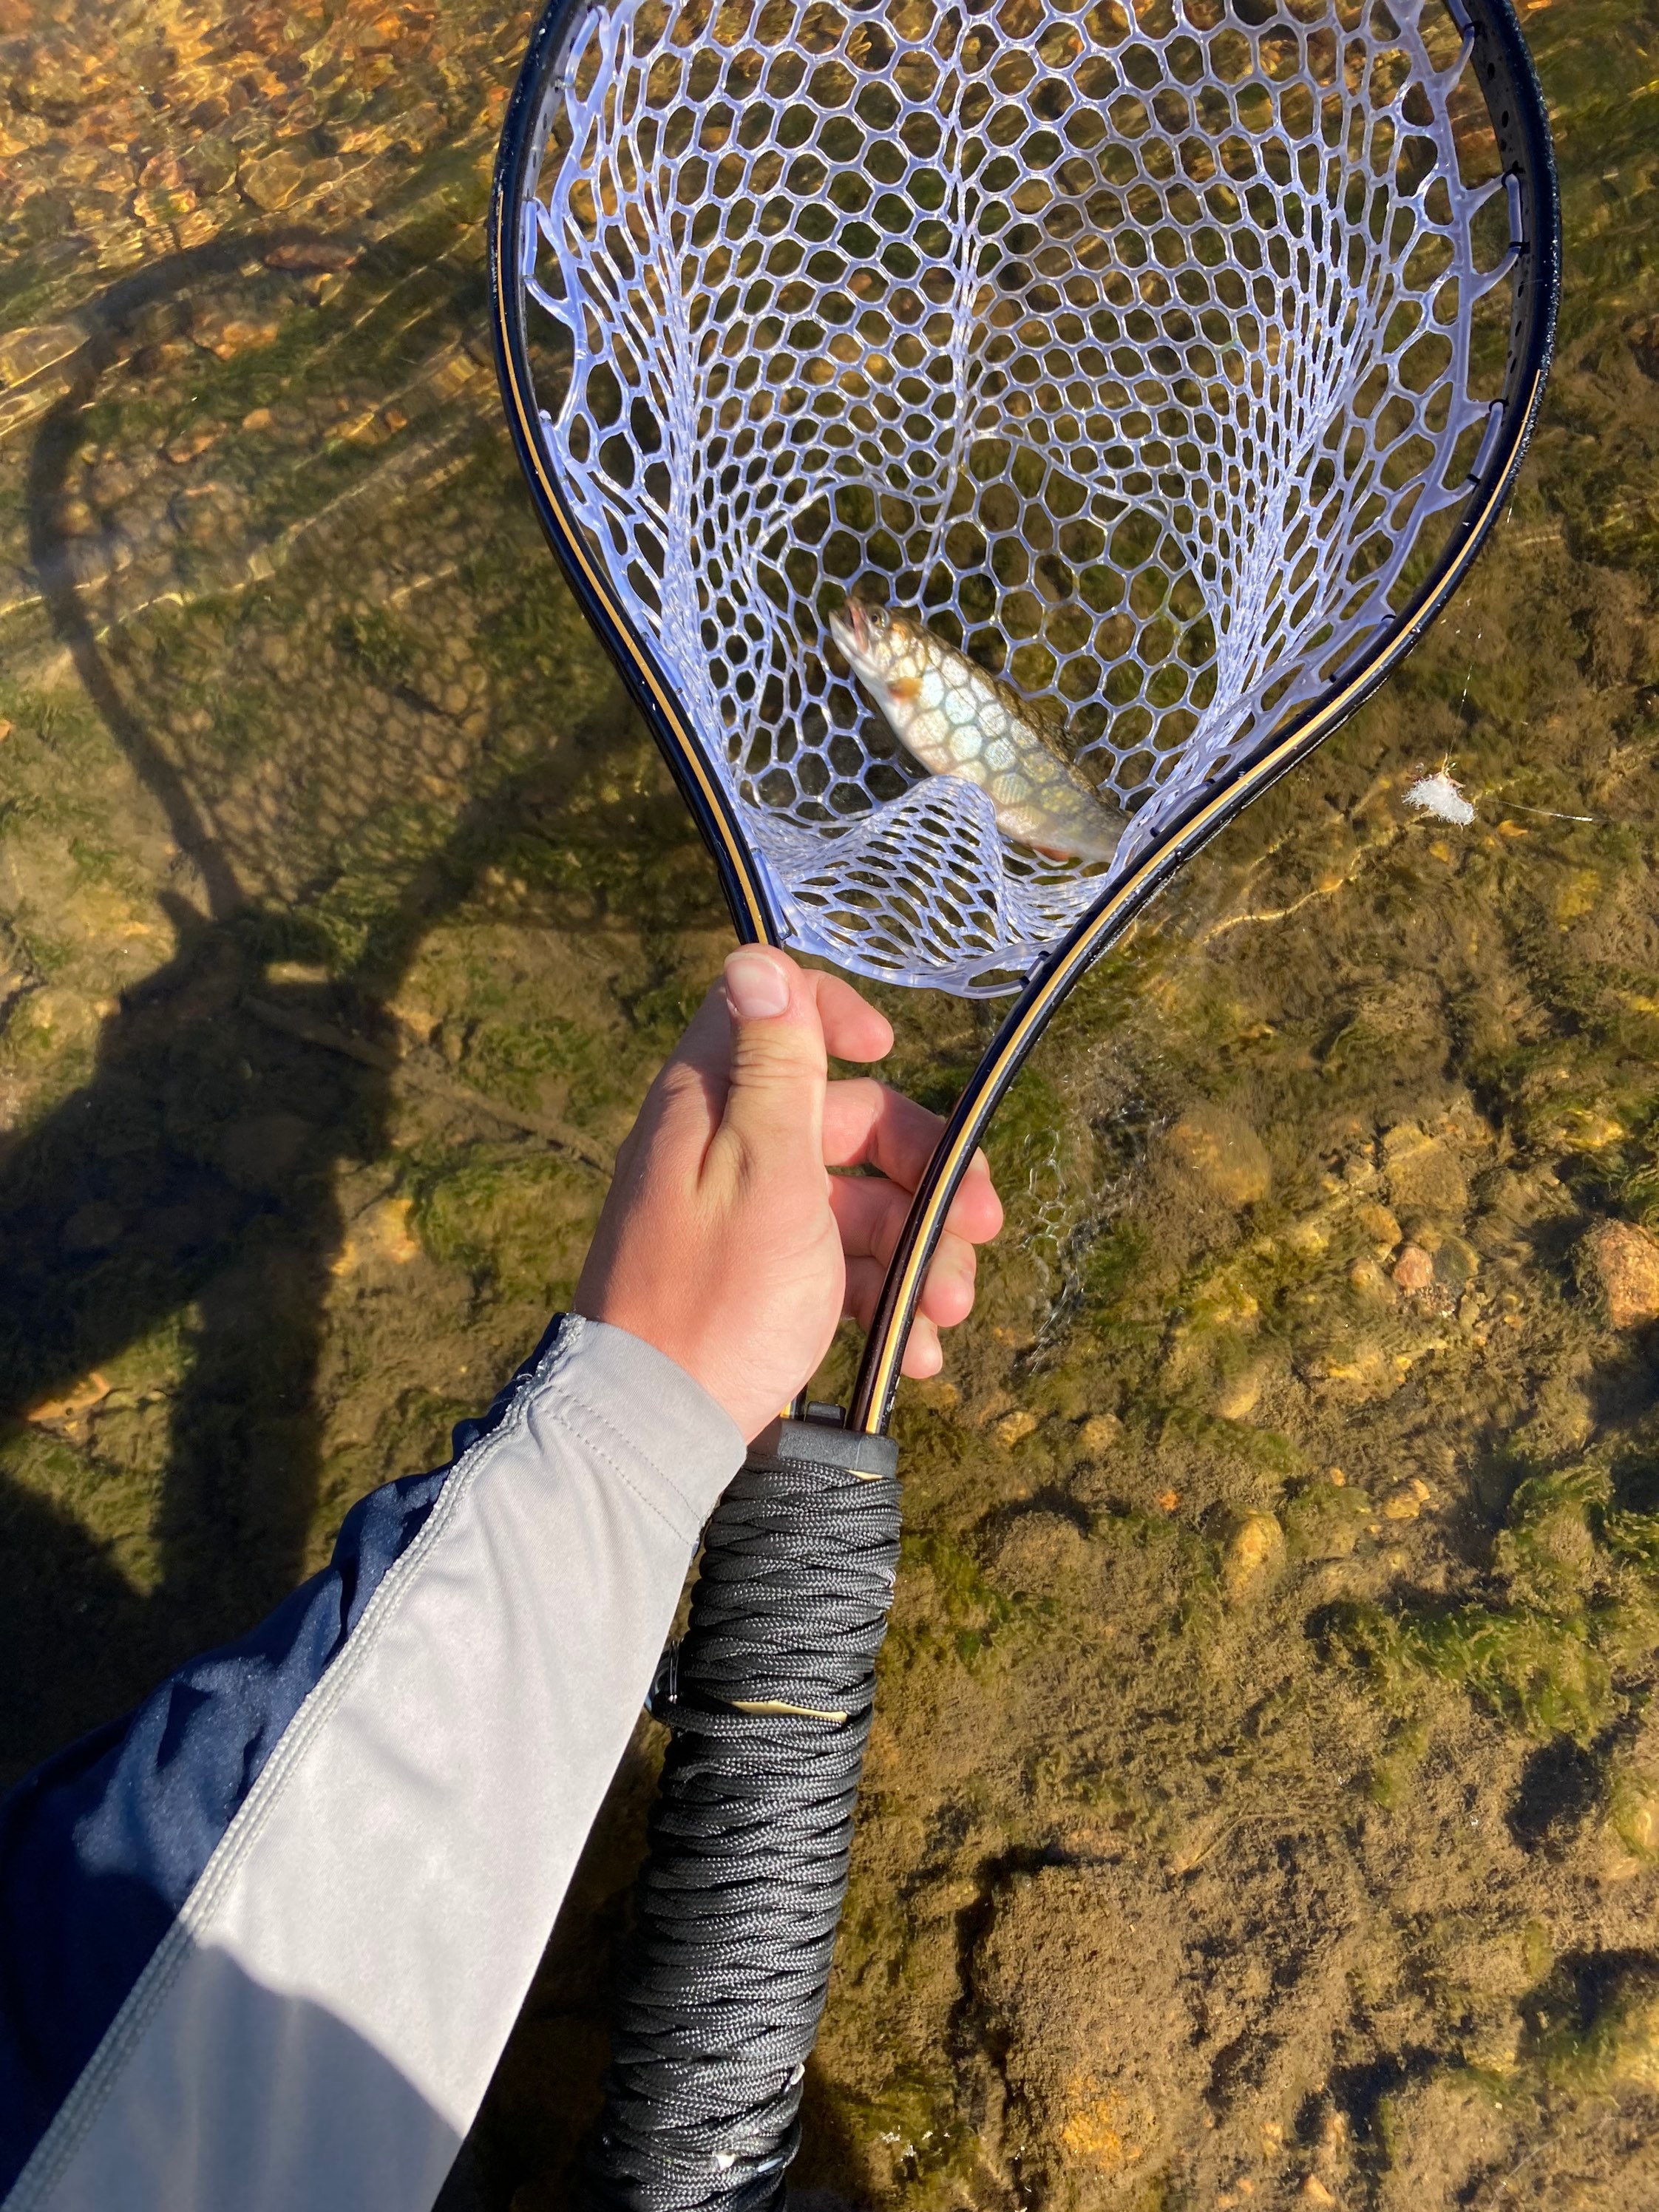 Vintage Aluminum Trout Fly Fishing Landing Net 20 1/2 Long Blue Net 